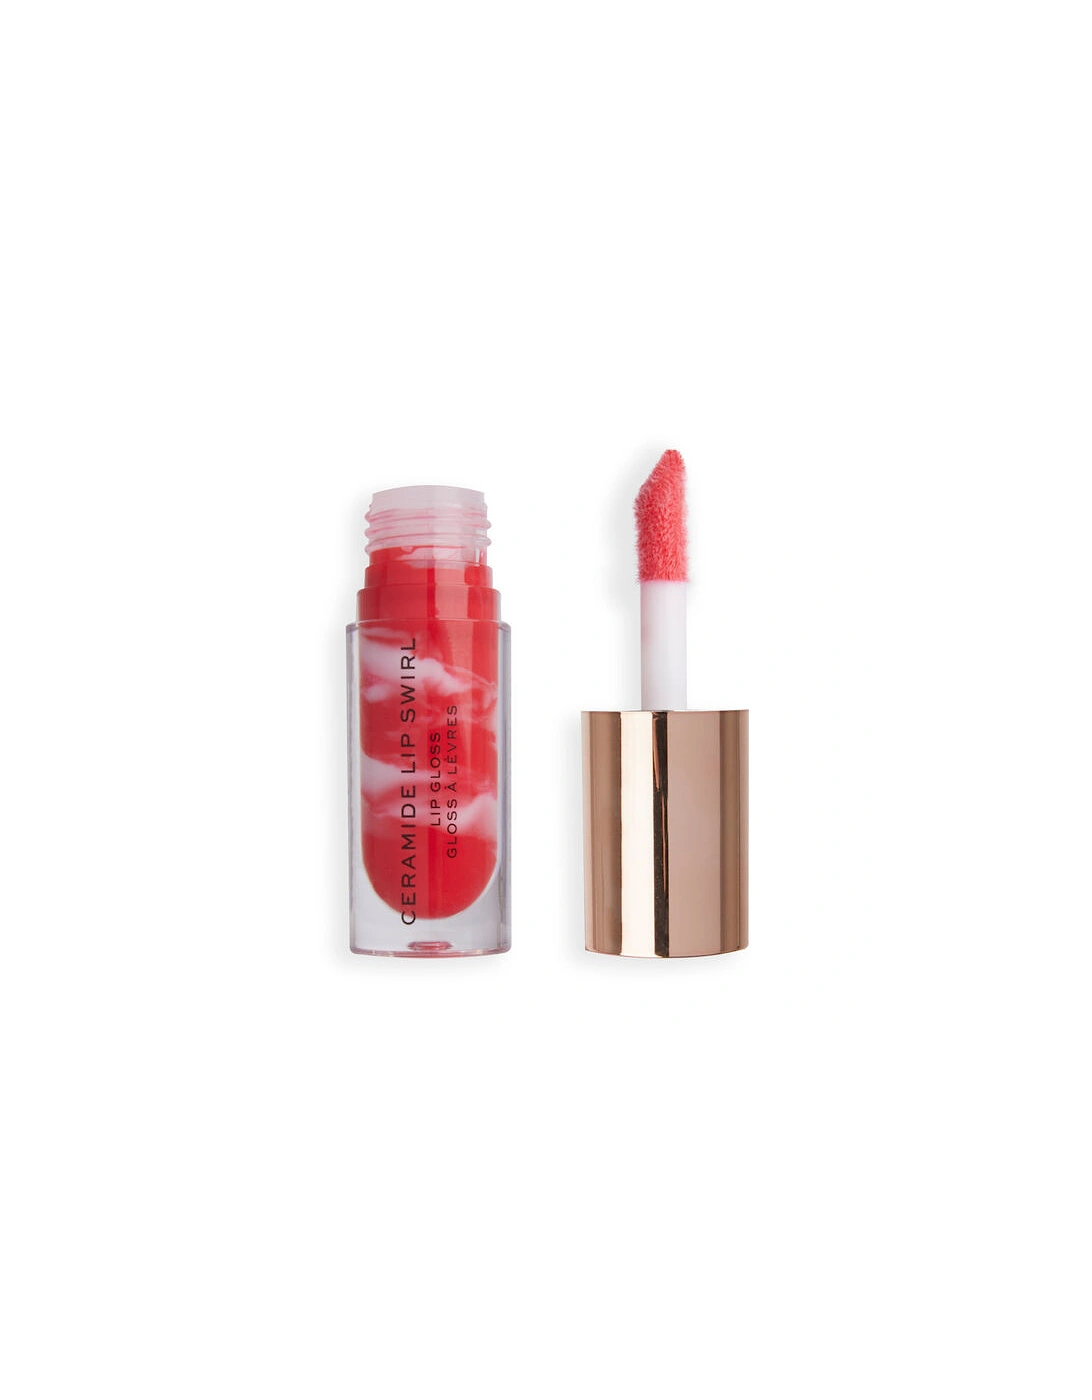 Makeup Ceramide Swirl Lip Gloss Bitten Red, 2 of 1